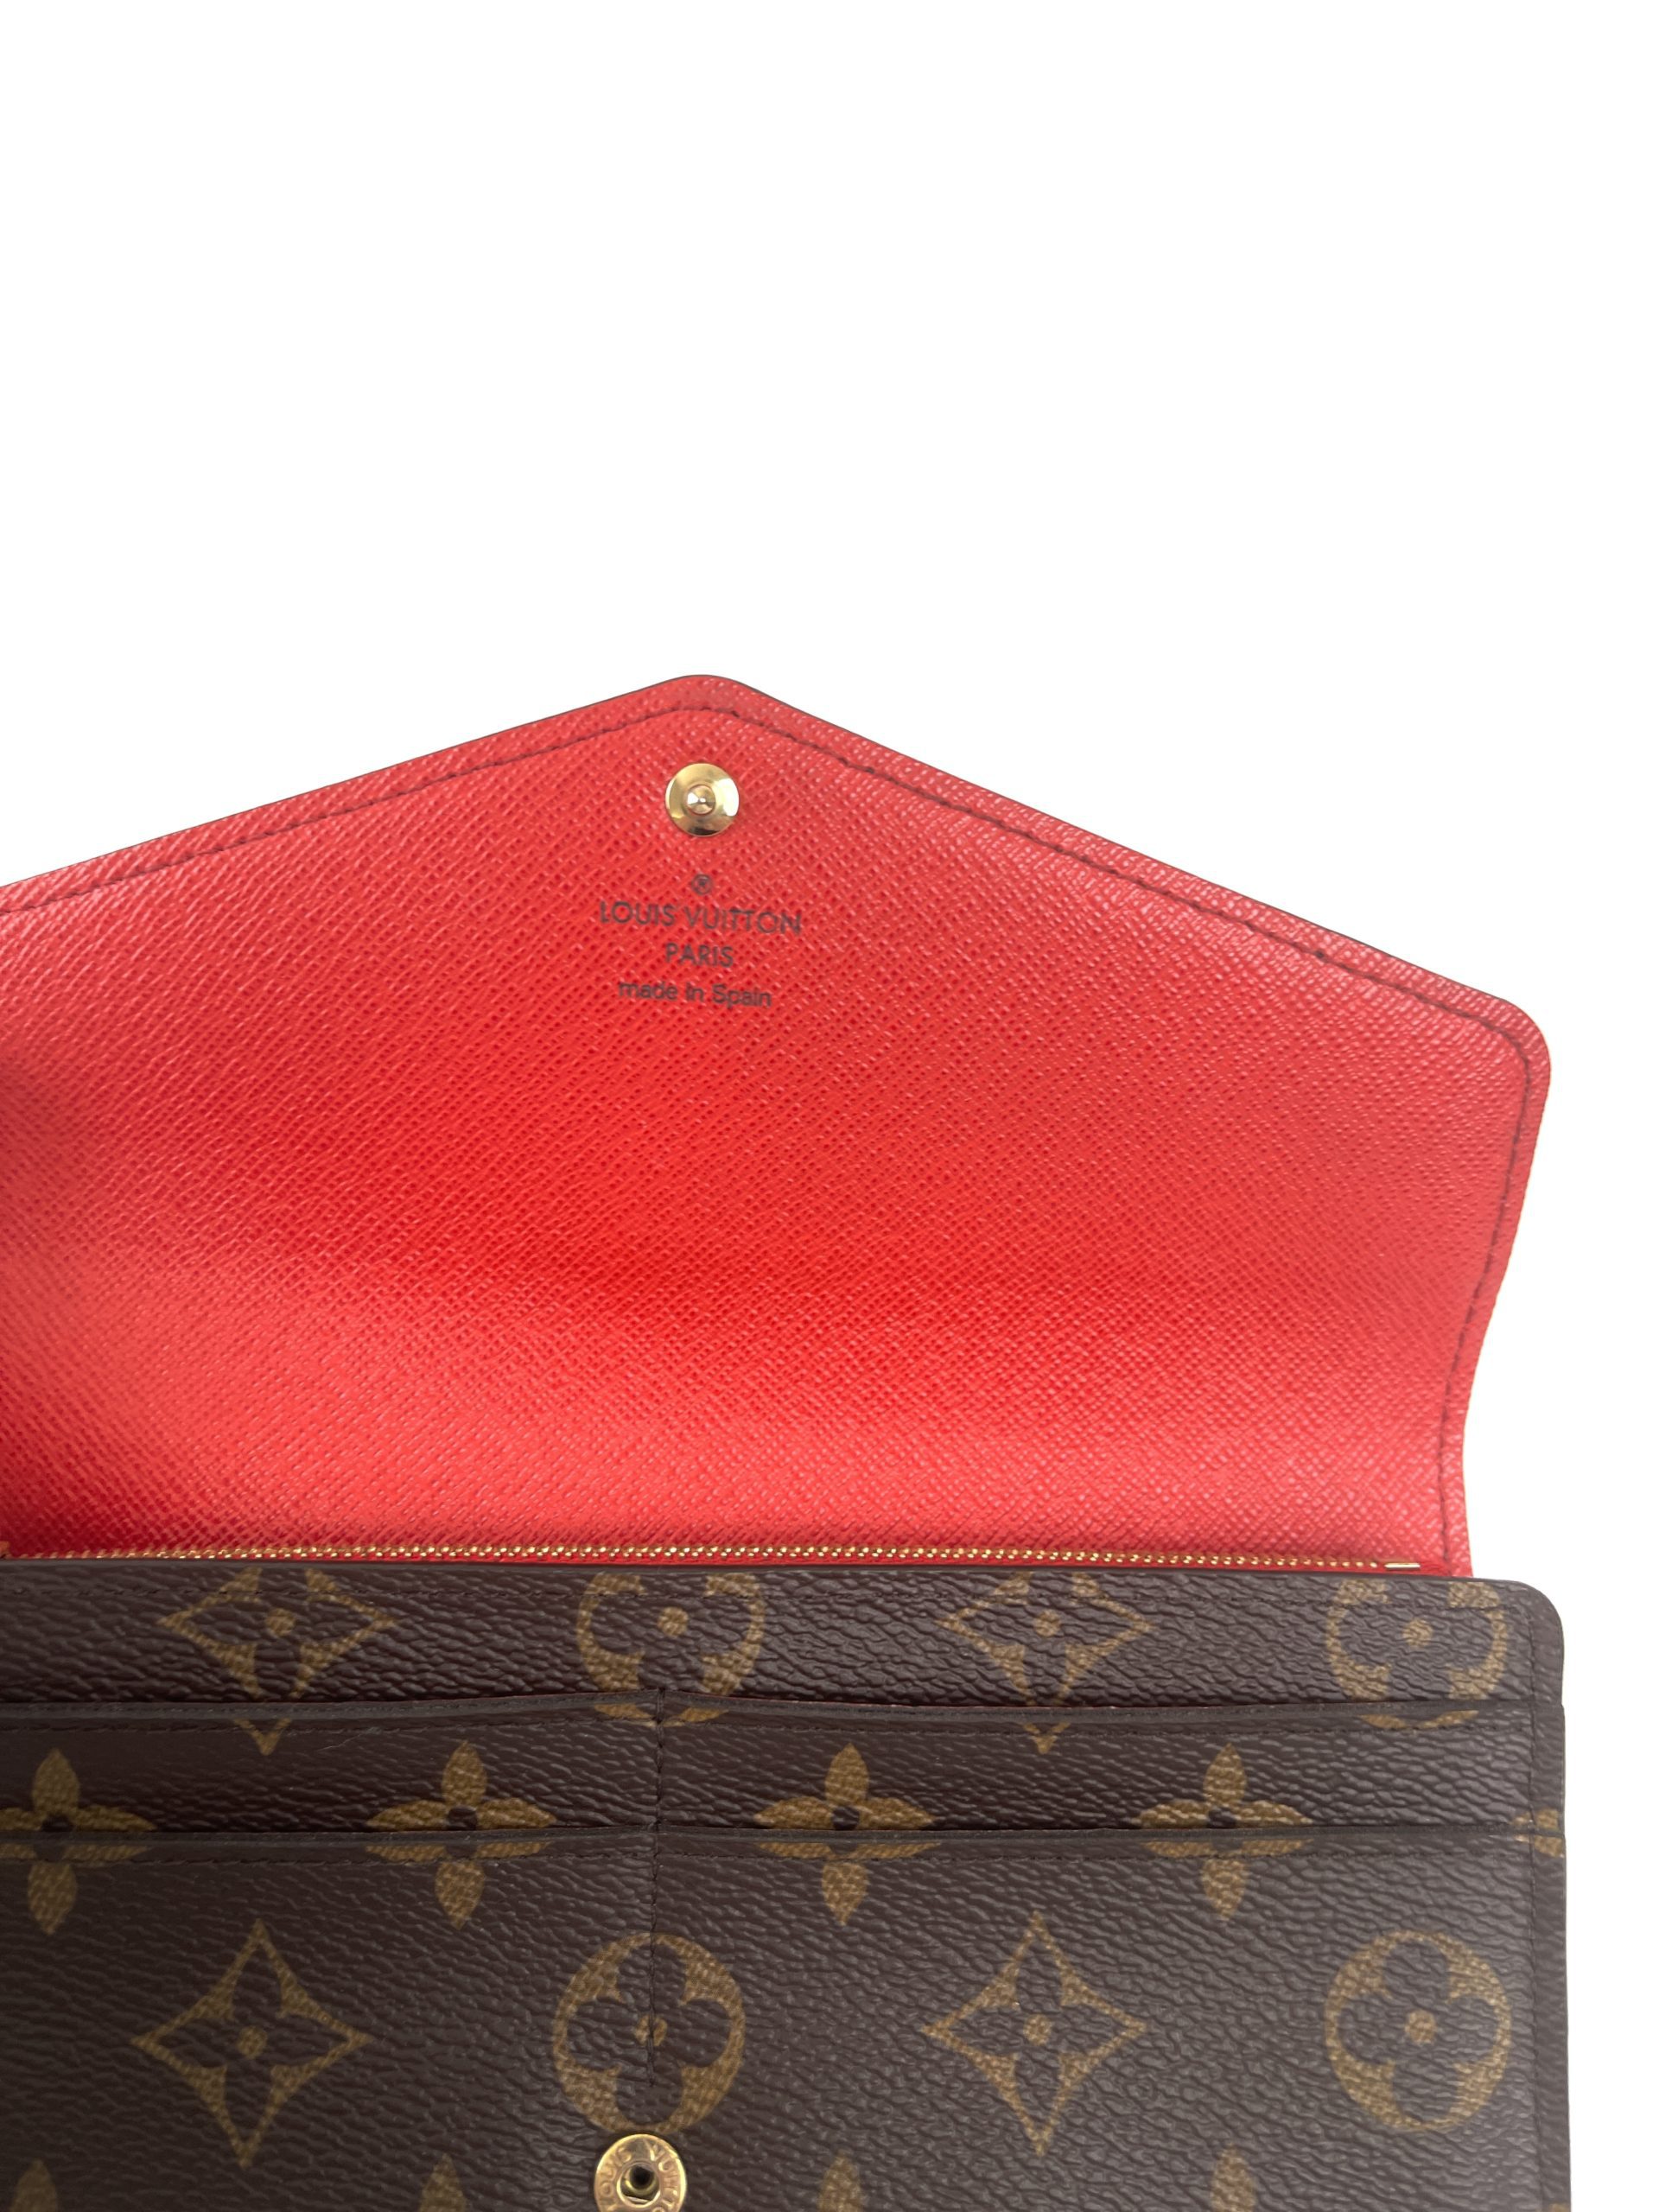 Louis Vuitton Carmine Red Epi Sarah Wallet